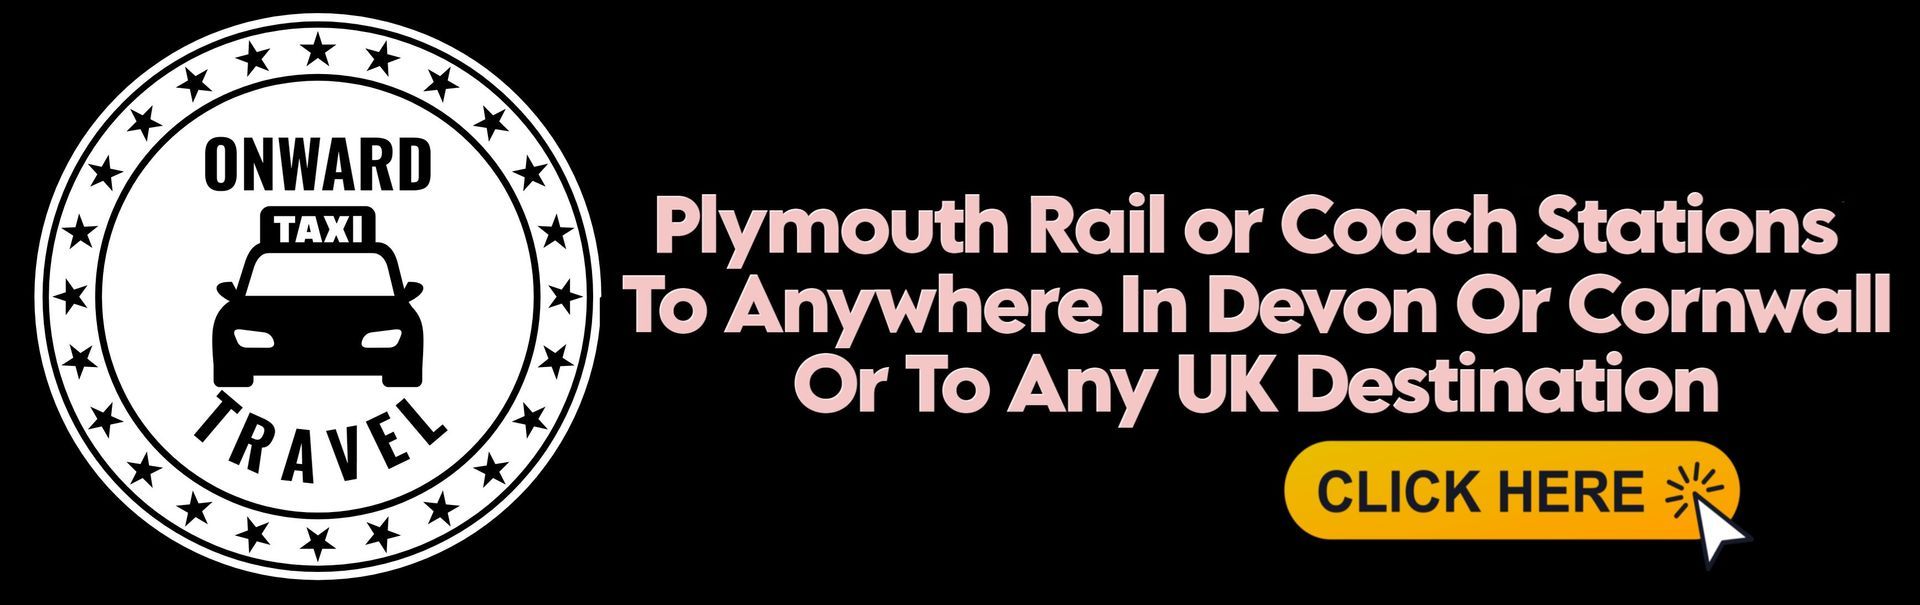 Onward travel Plymouth